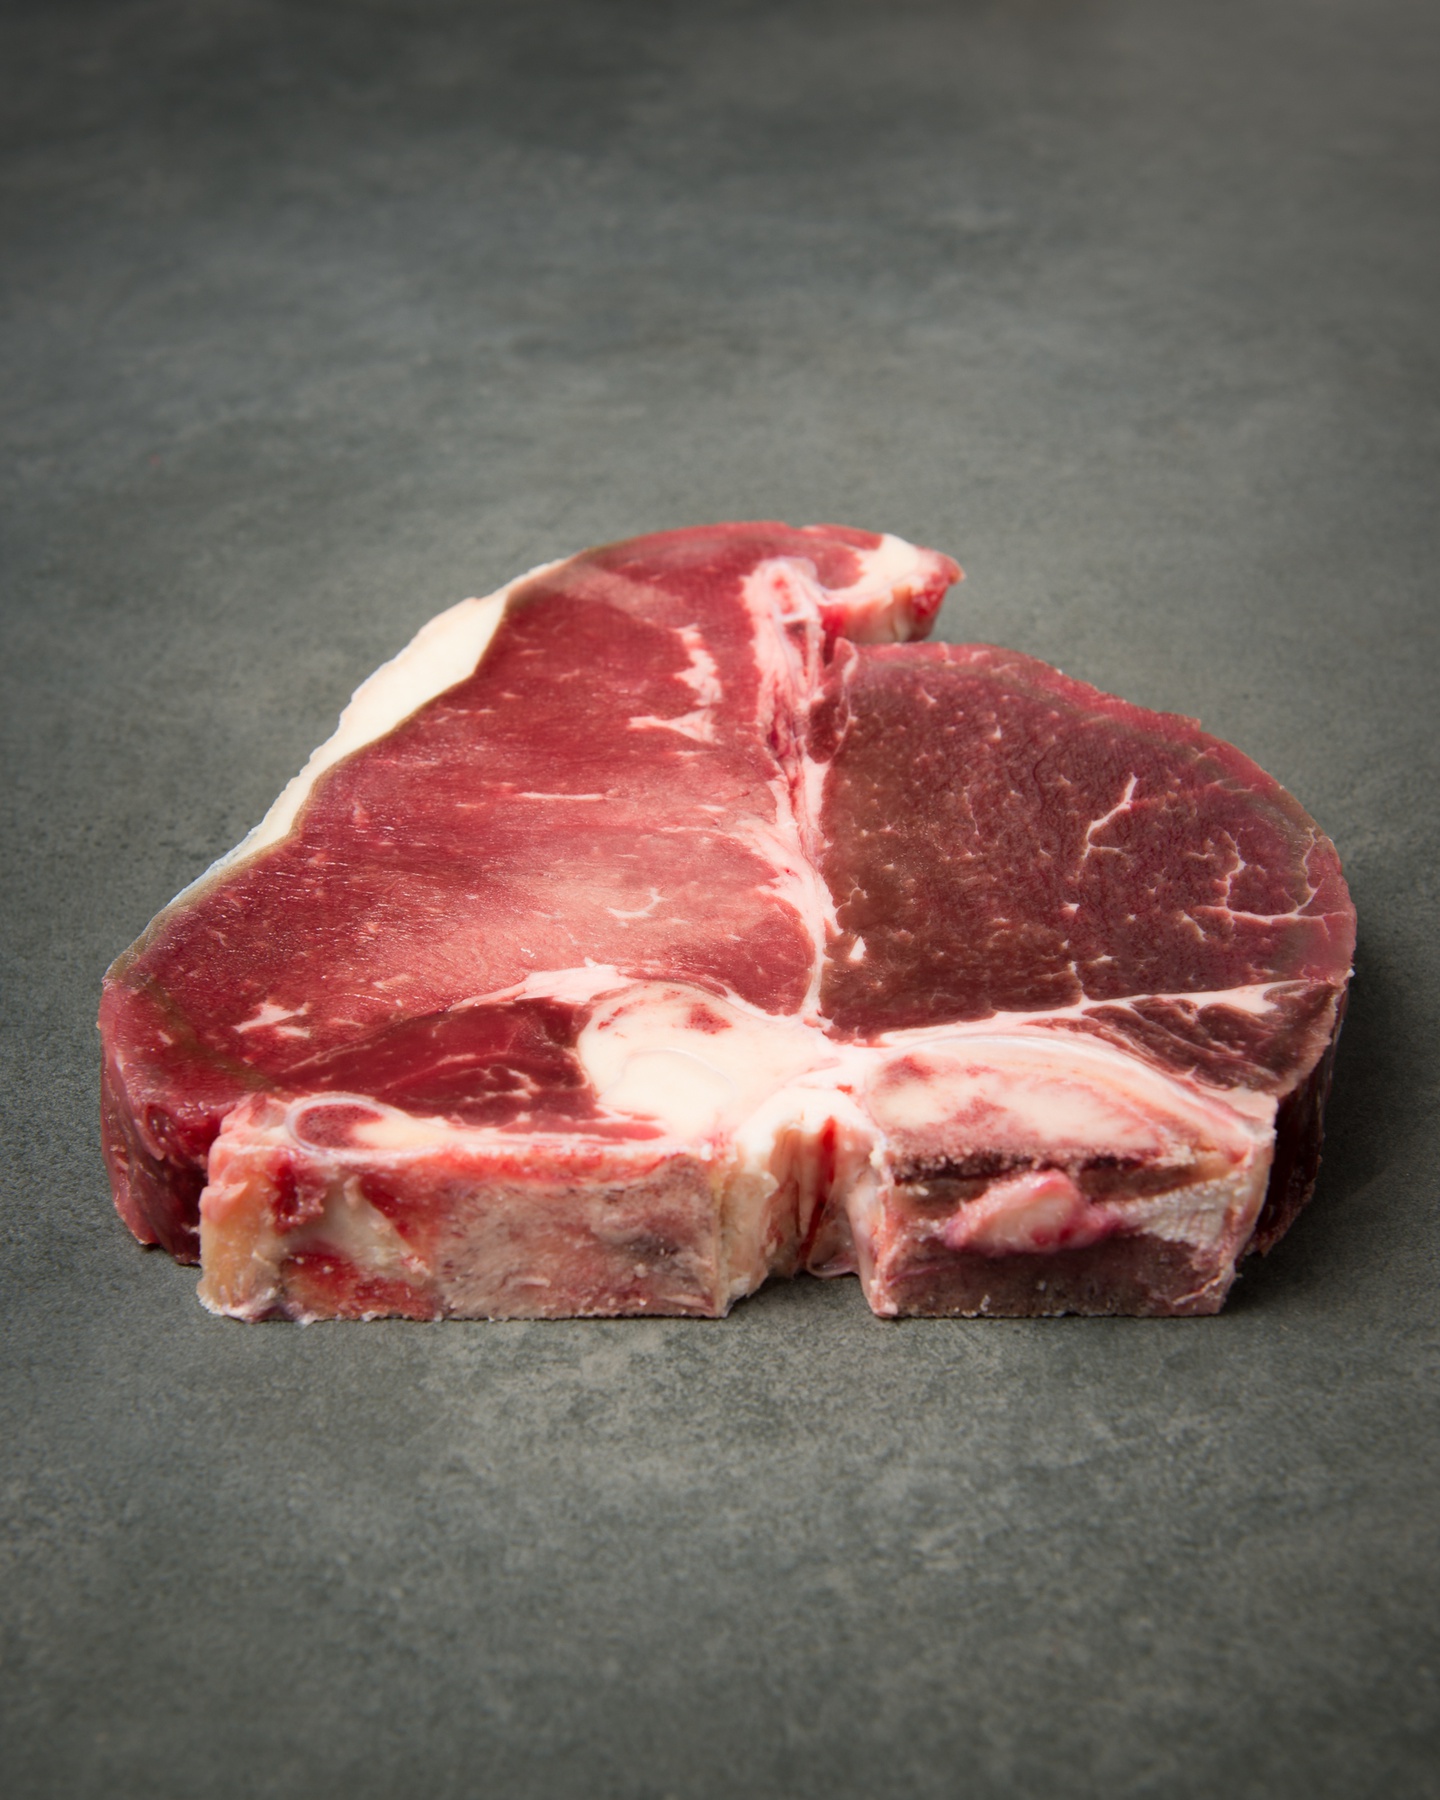 T-Bone steak (1 kg)